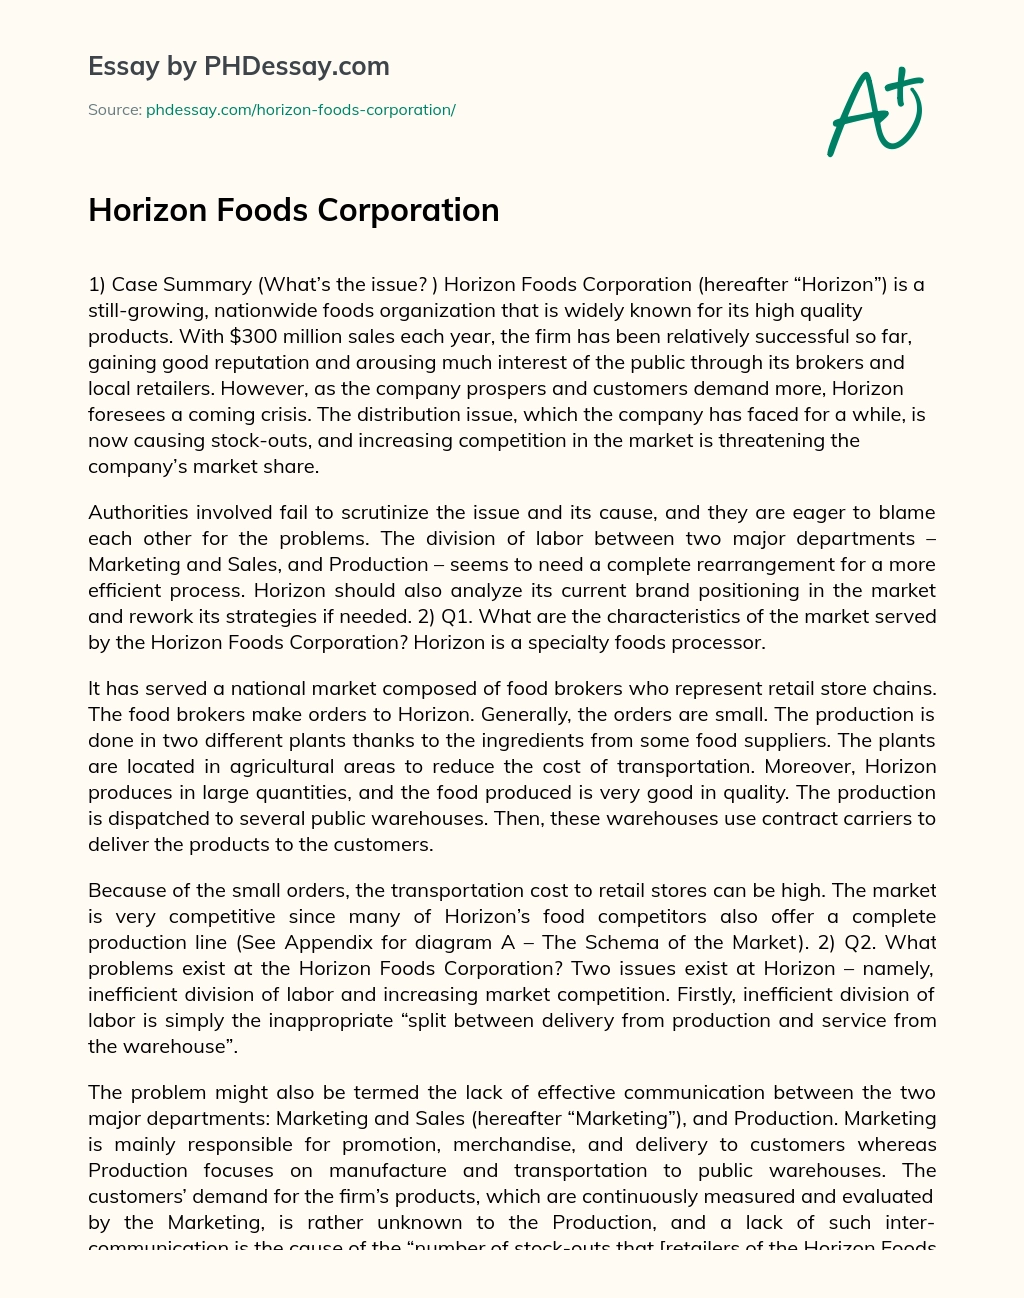 Horizon Foods Corporation essay